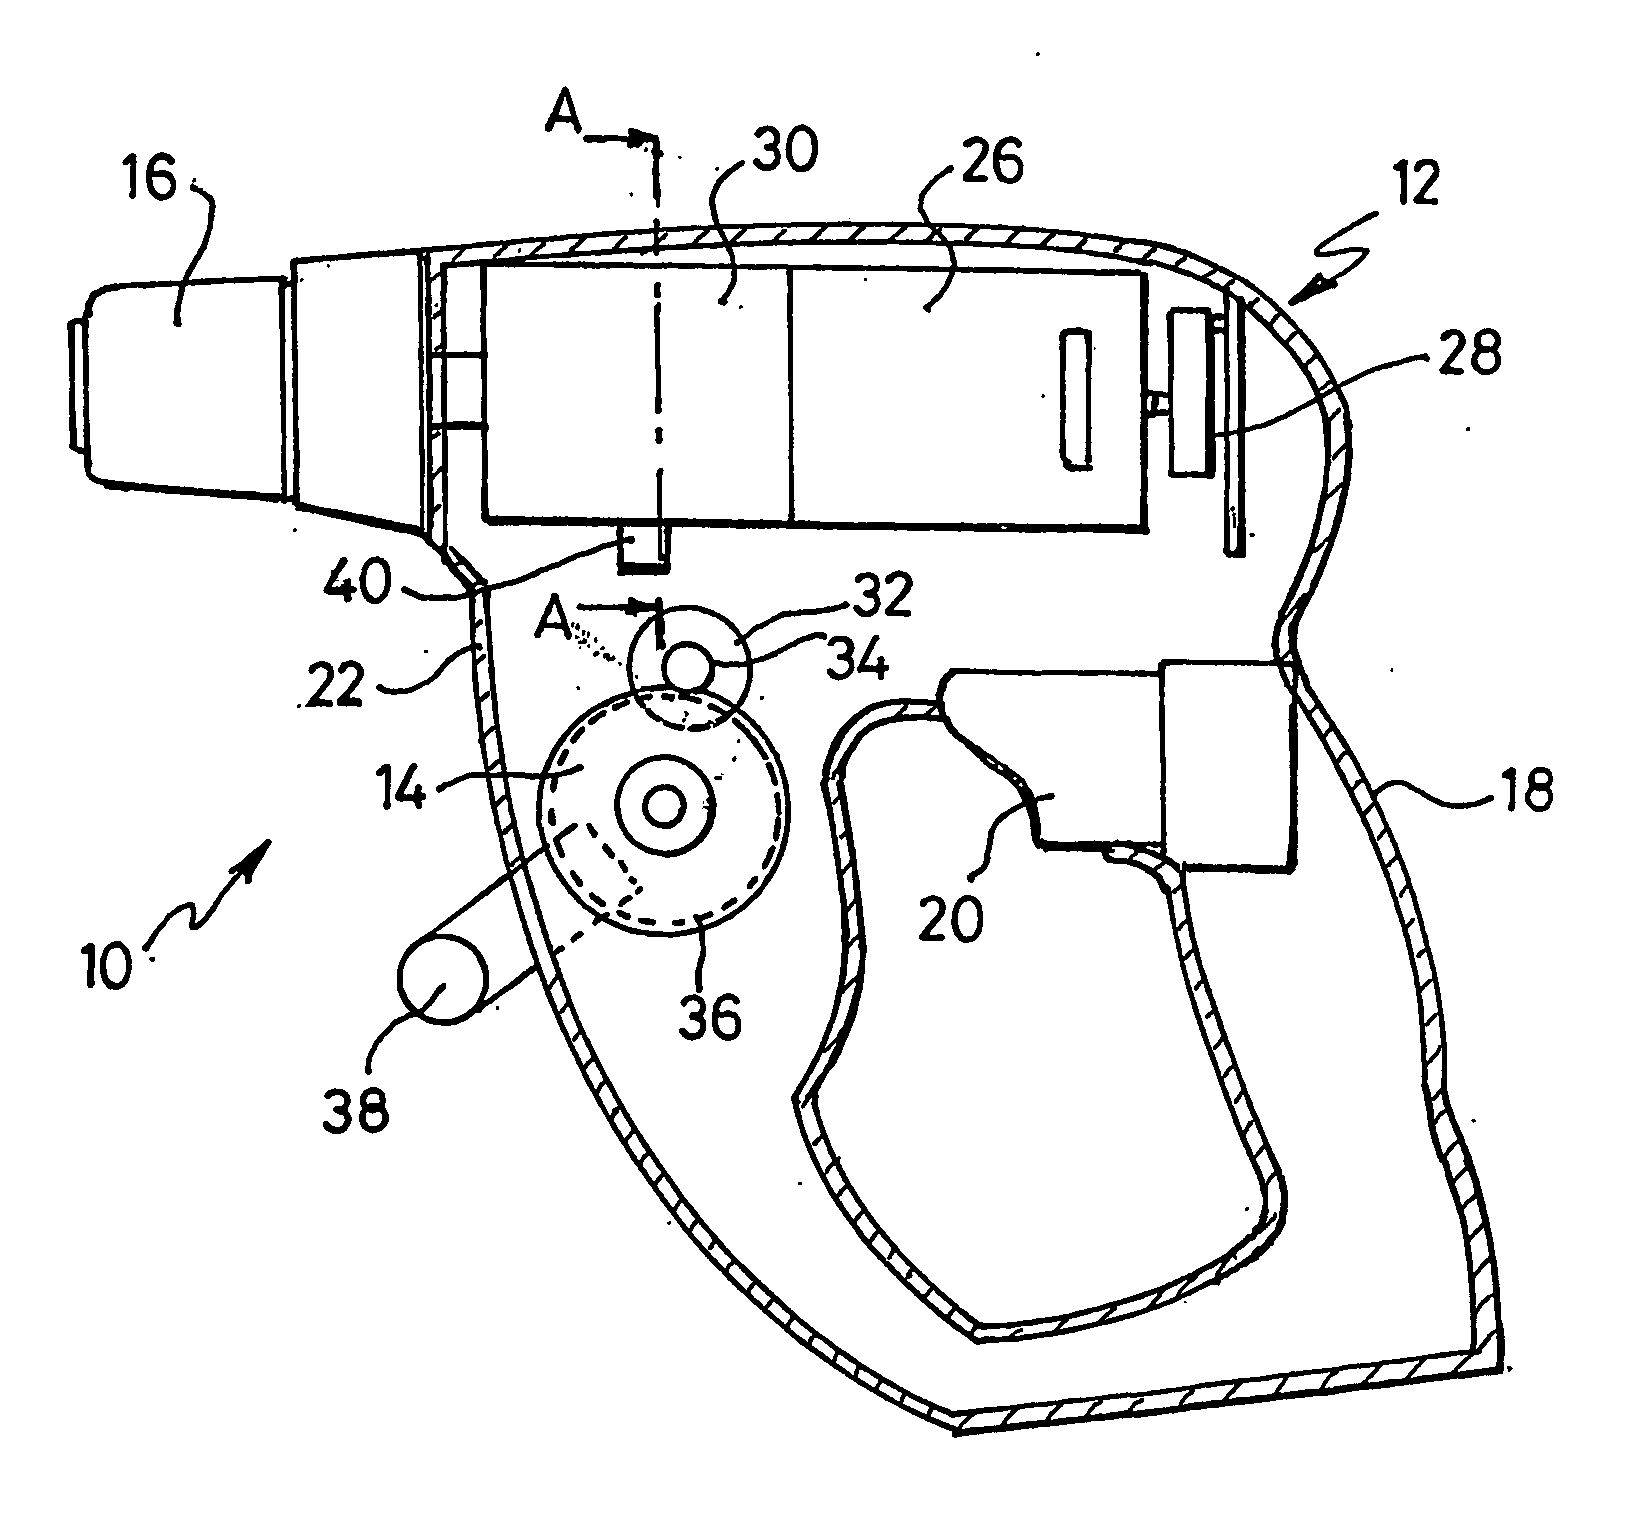 Handwheel-operated device